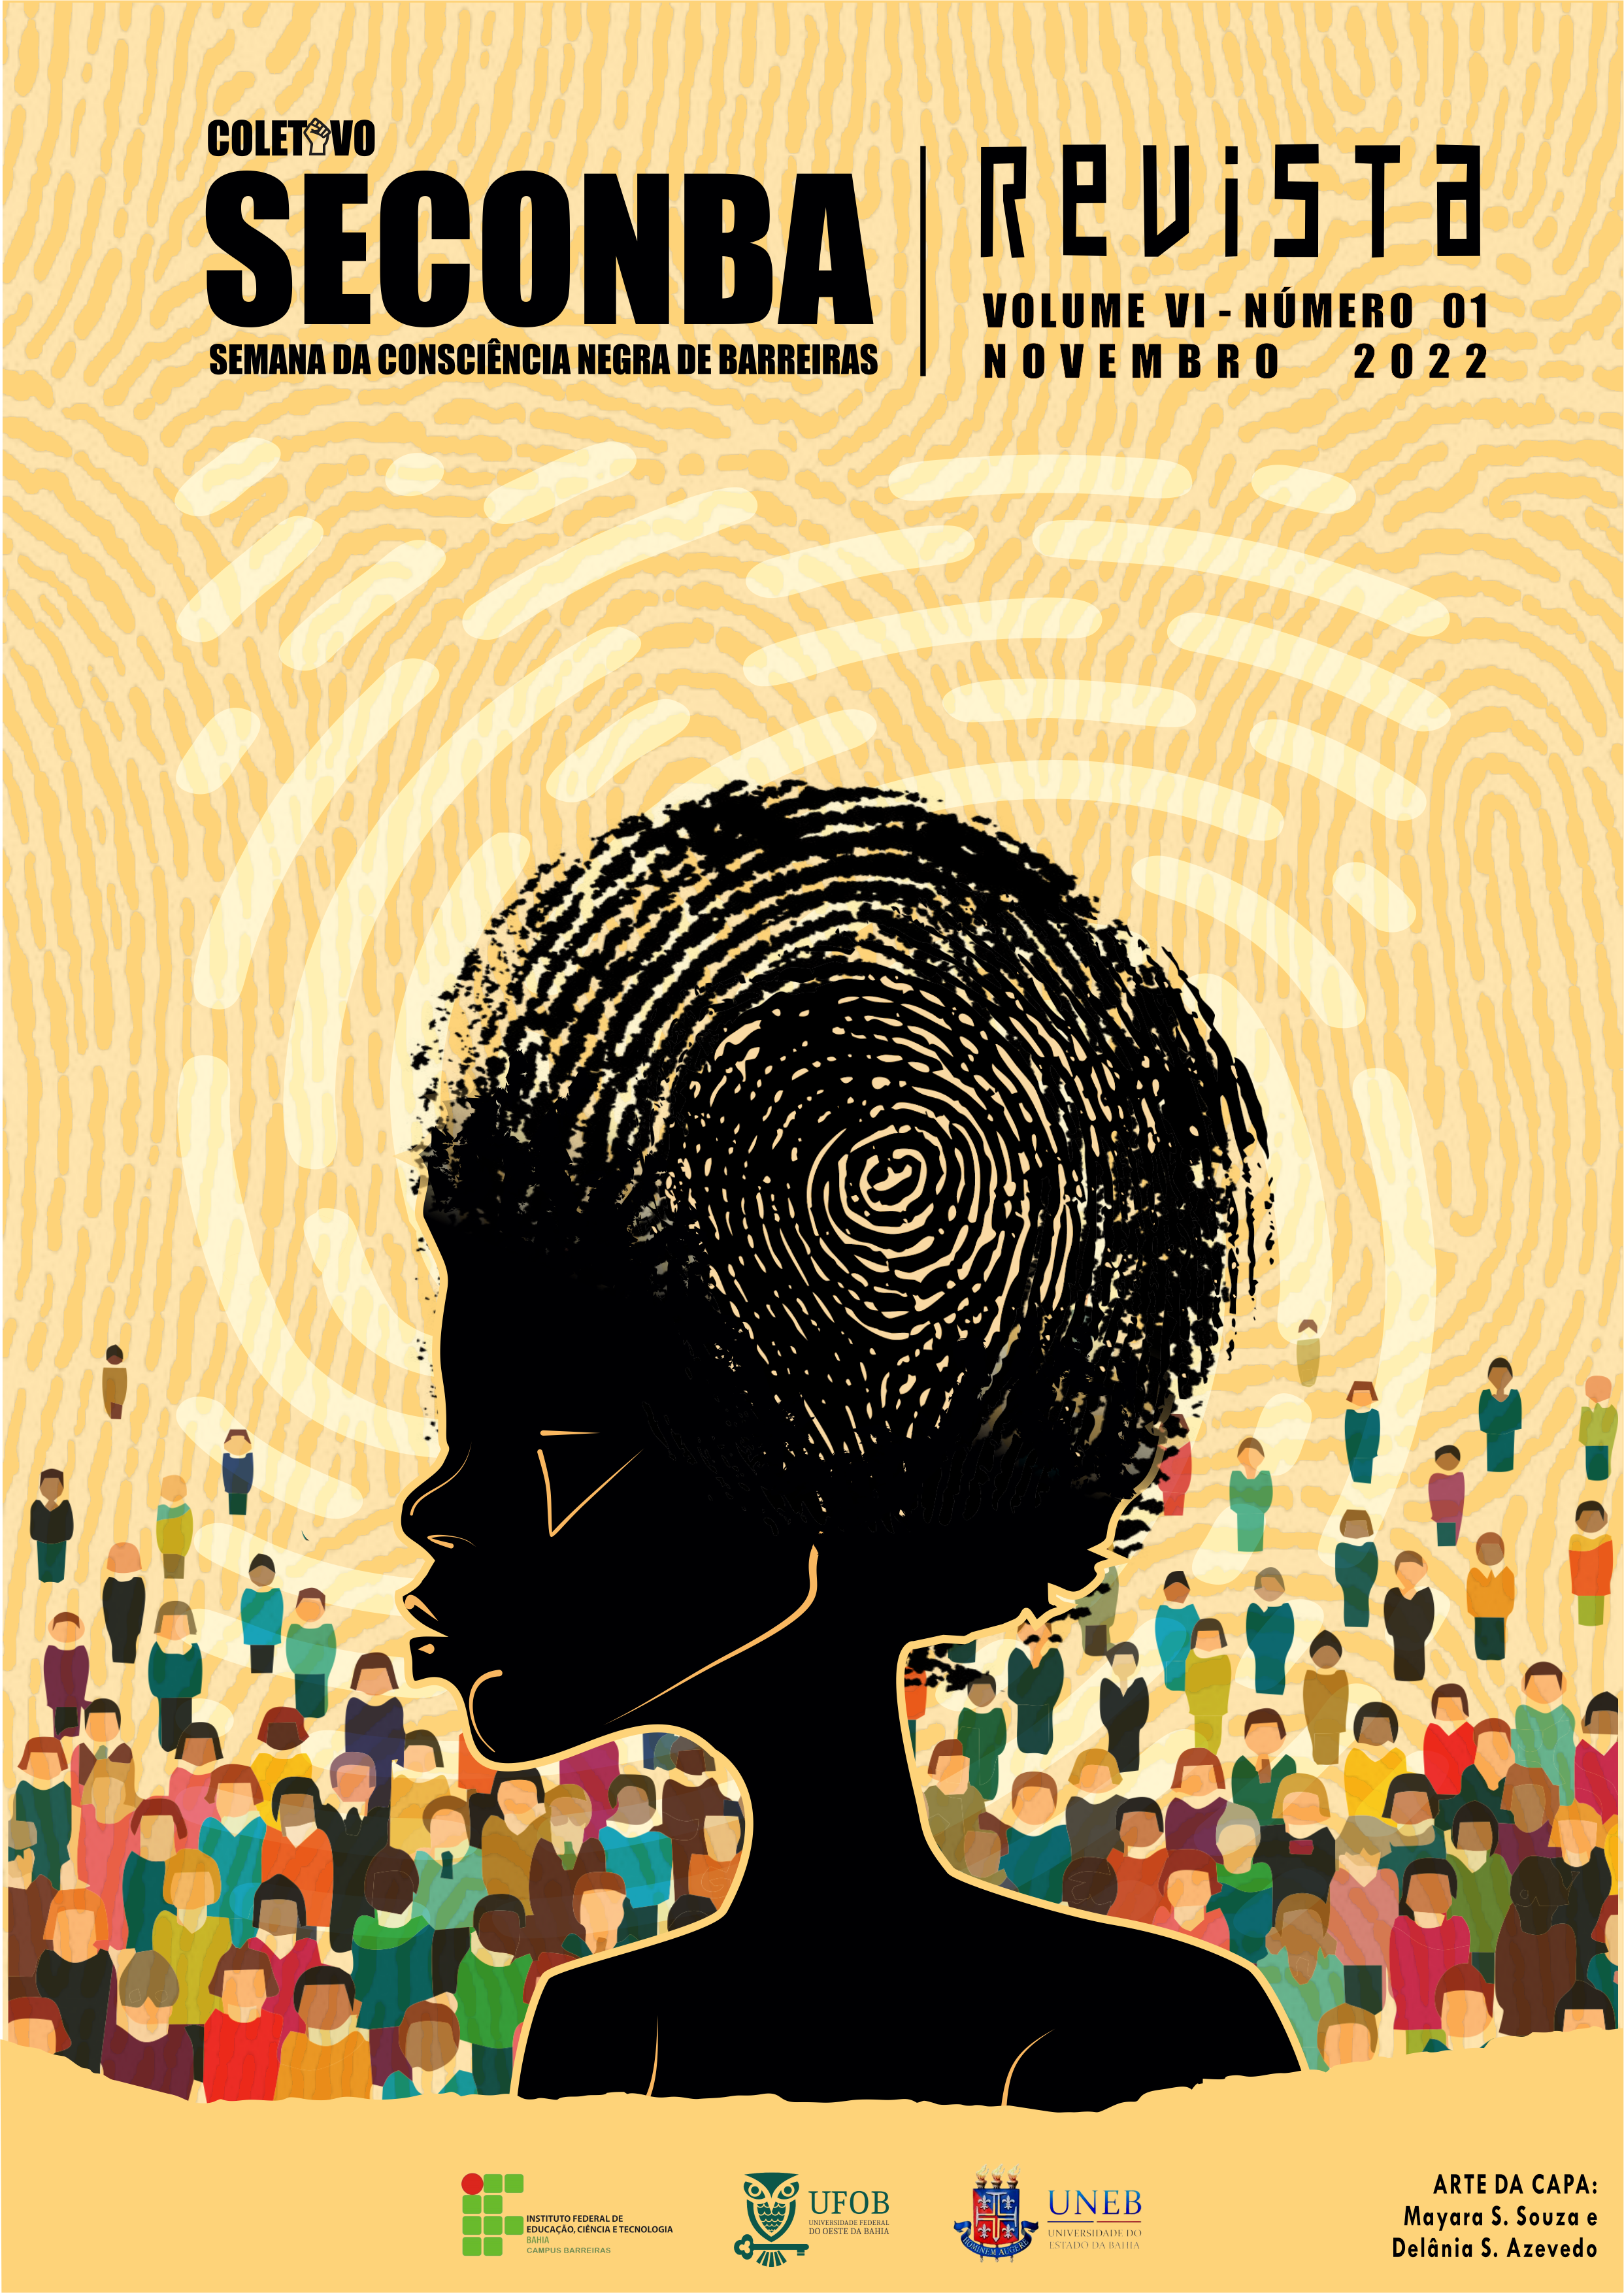 Arte da capa: Mayara S. Souza e Delânia S. Azevedo